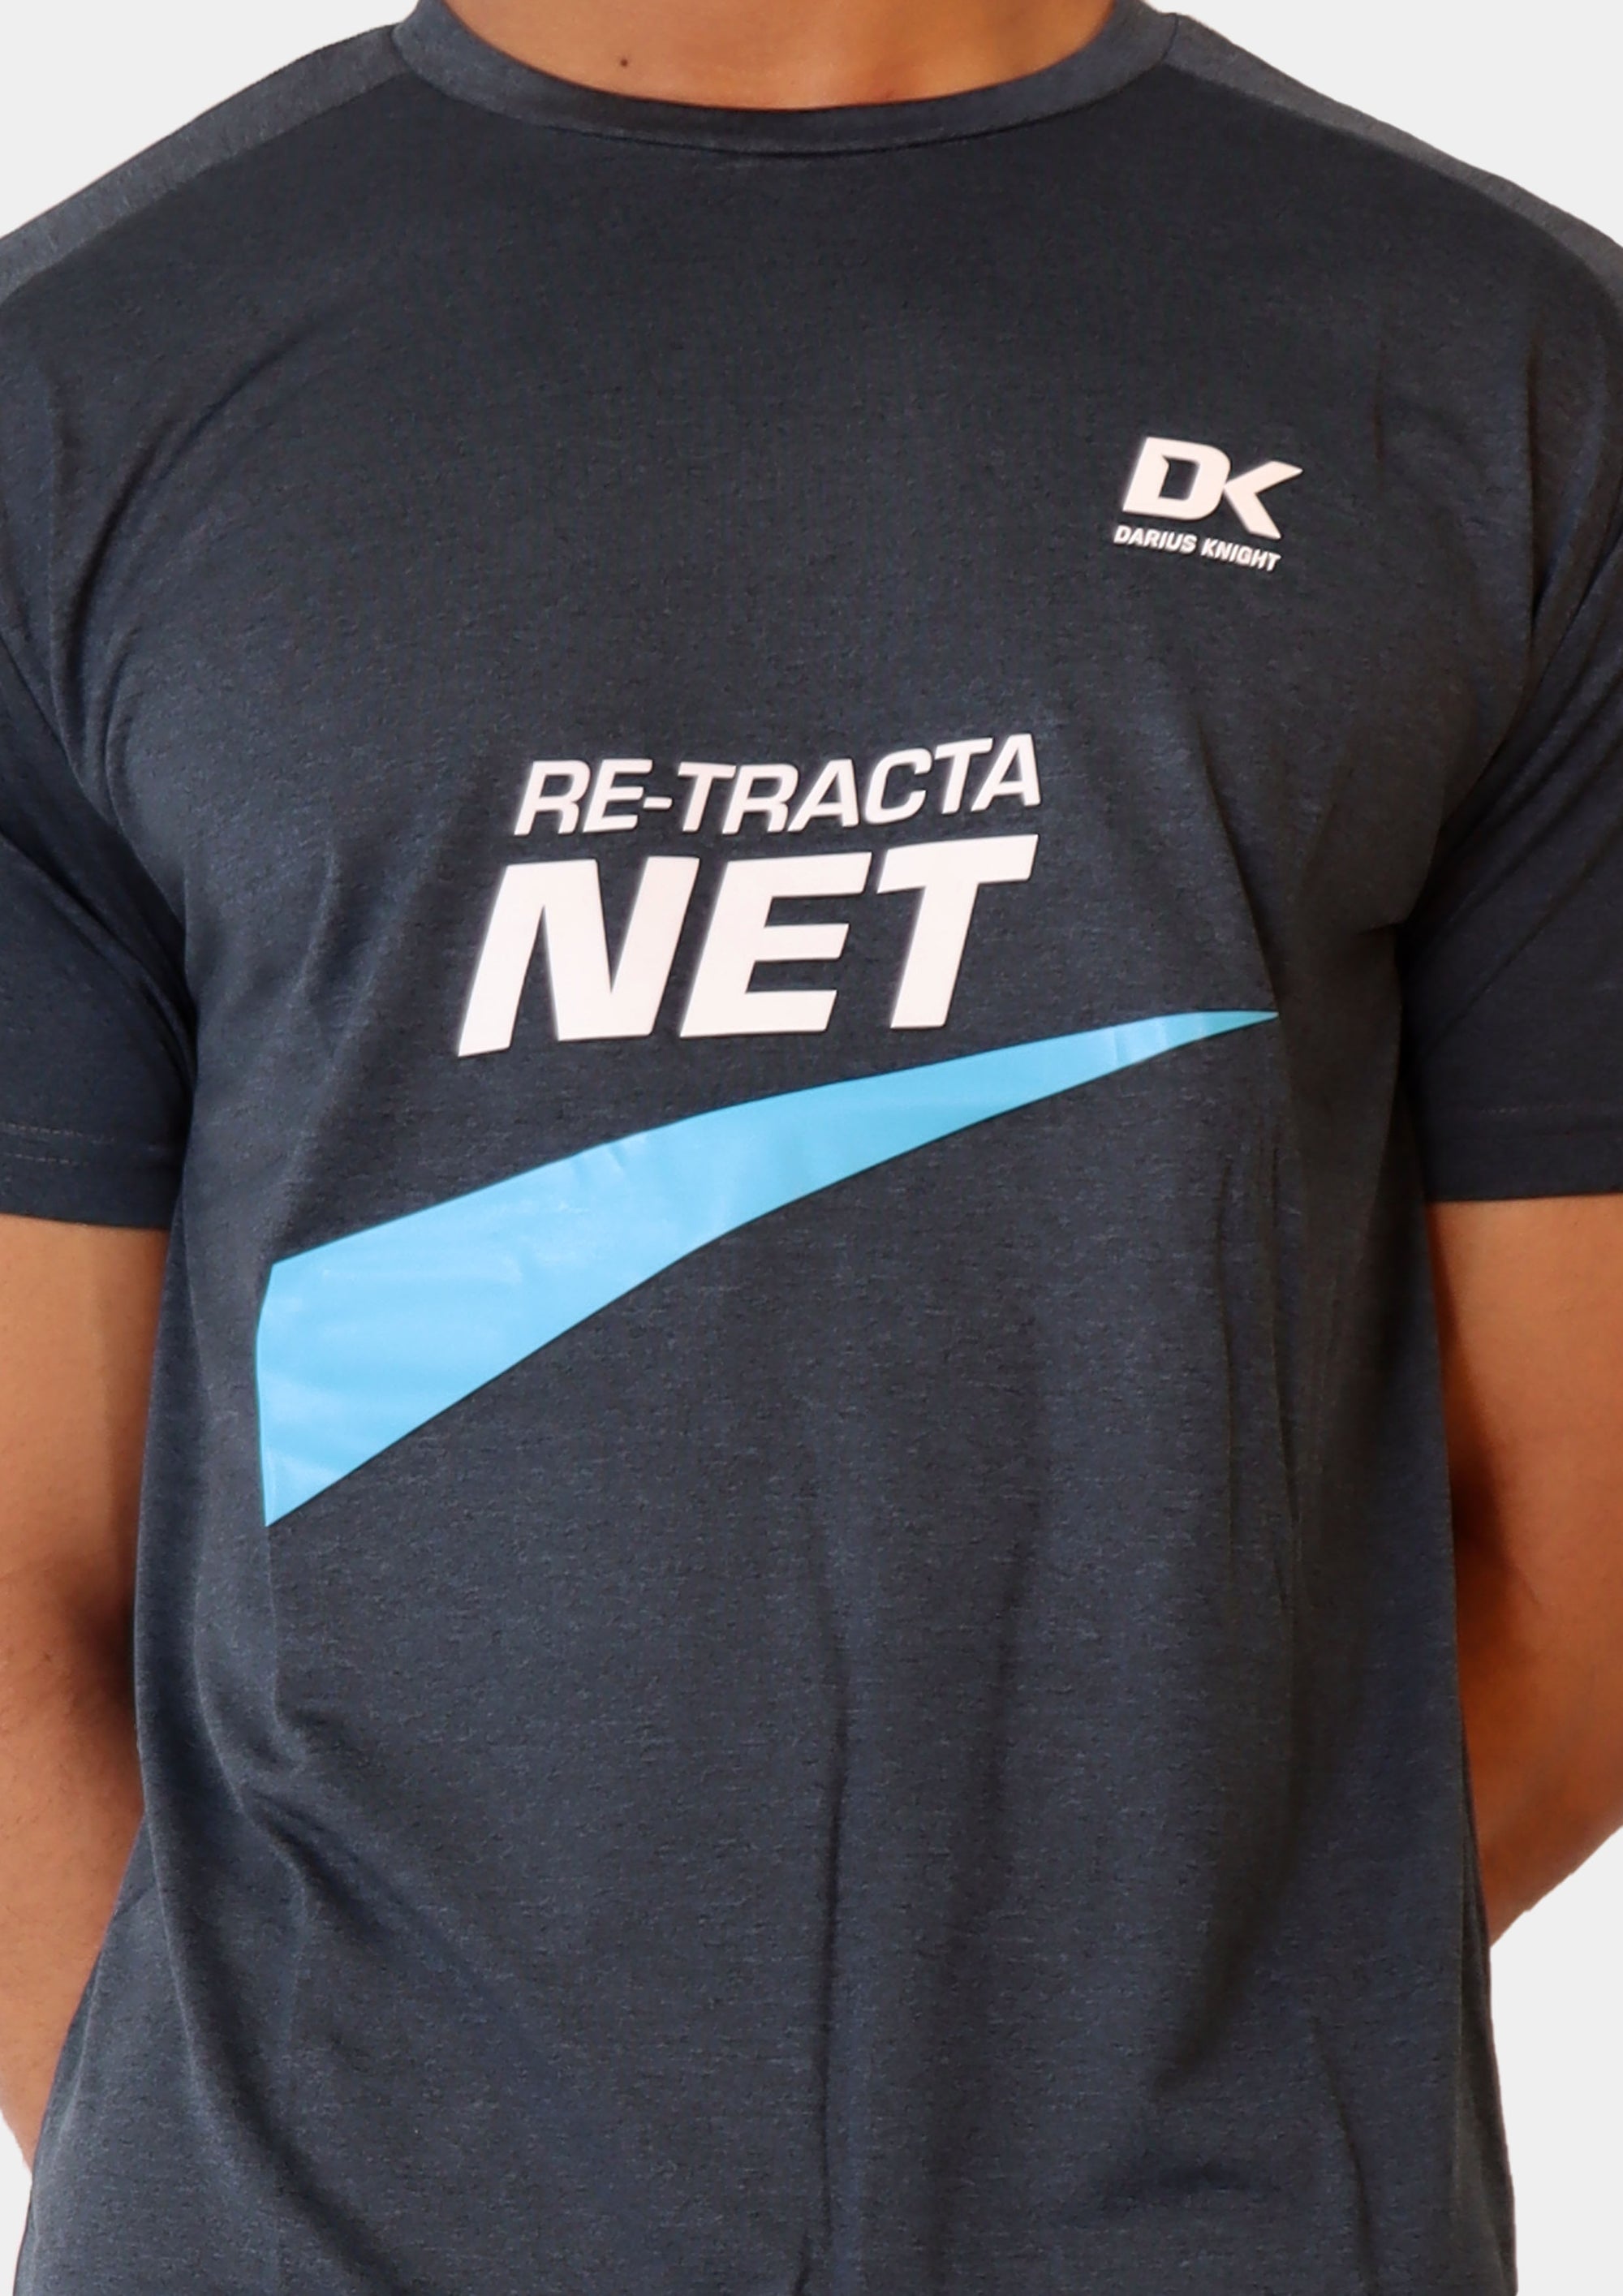 DK Re-tracta Training Shirt (Dark Blue) - DK Sports